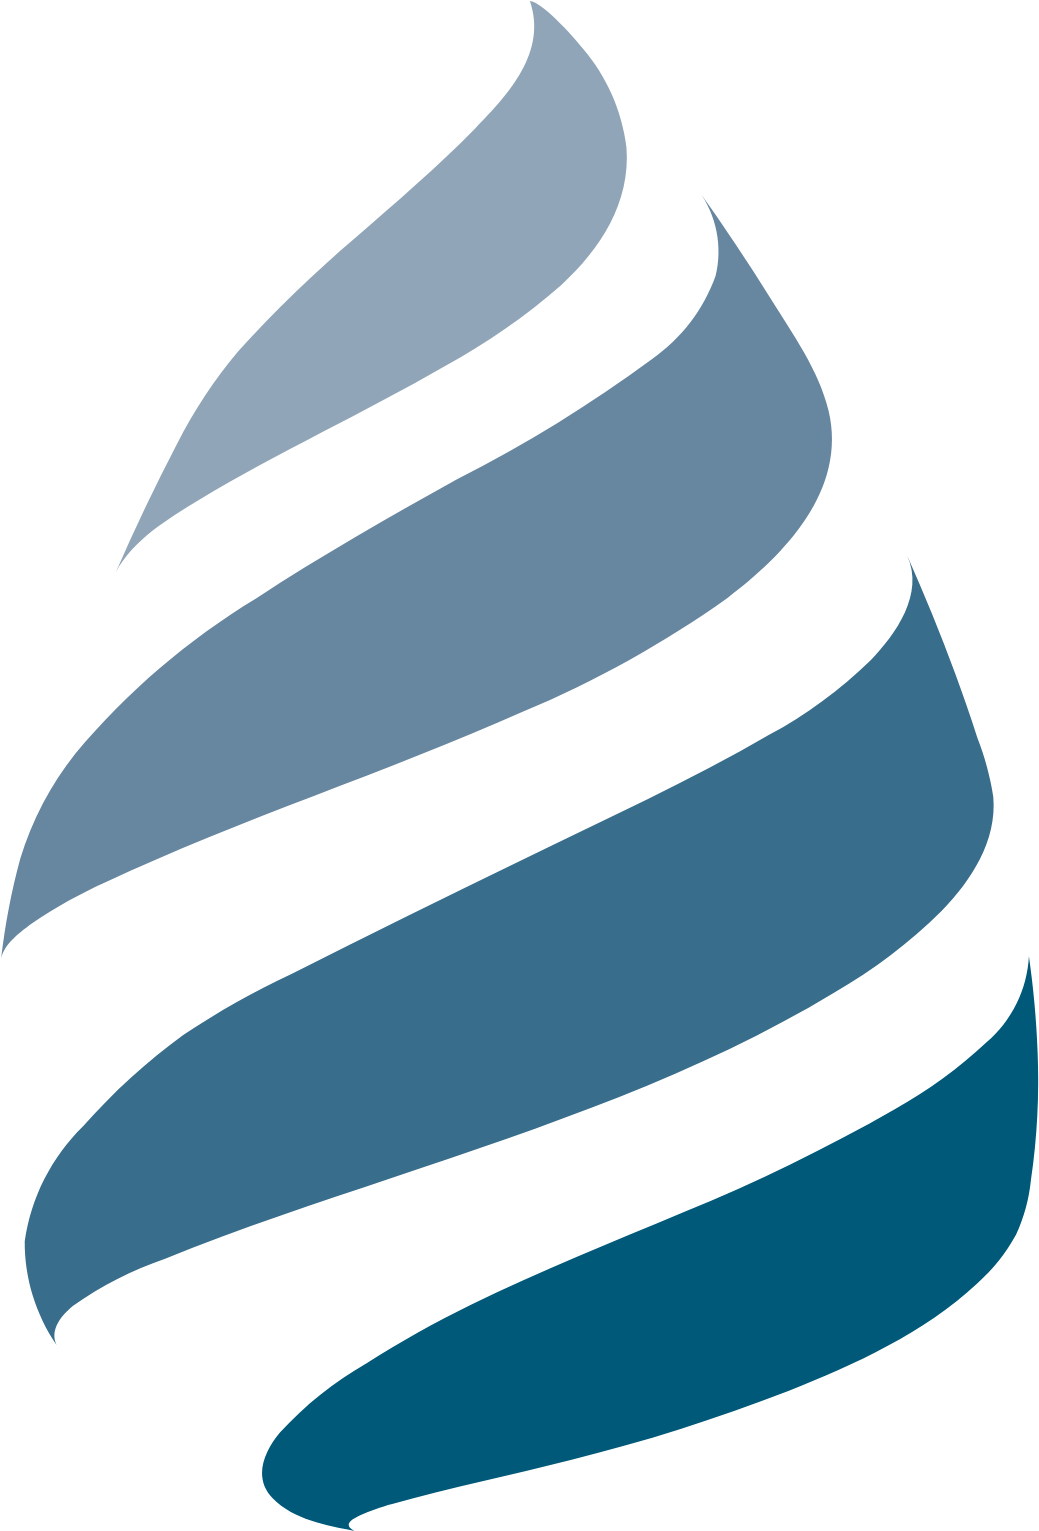 International Petroleum logo in transparent PNG and vectorized SVG formats